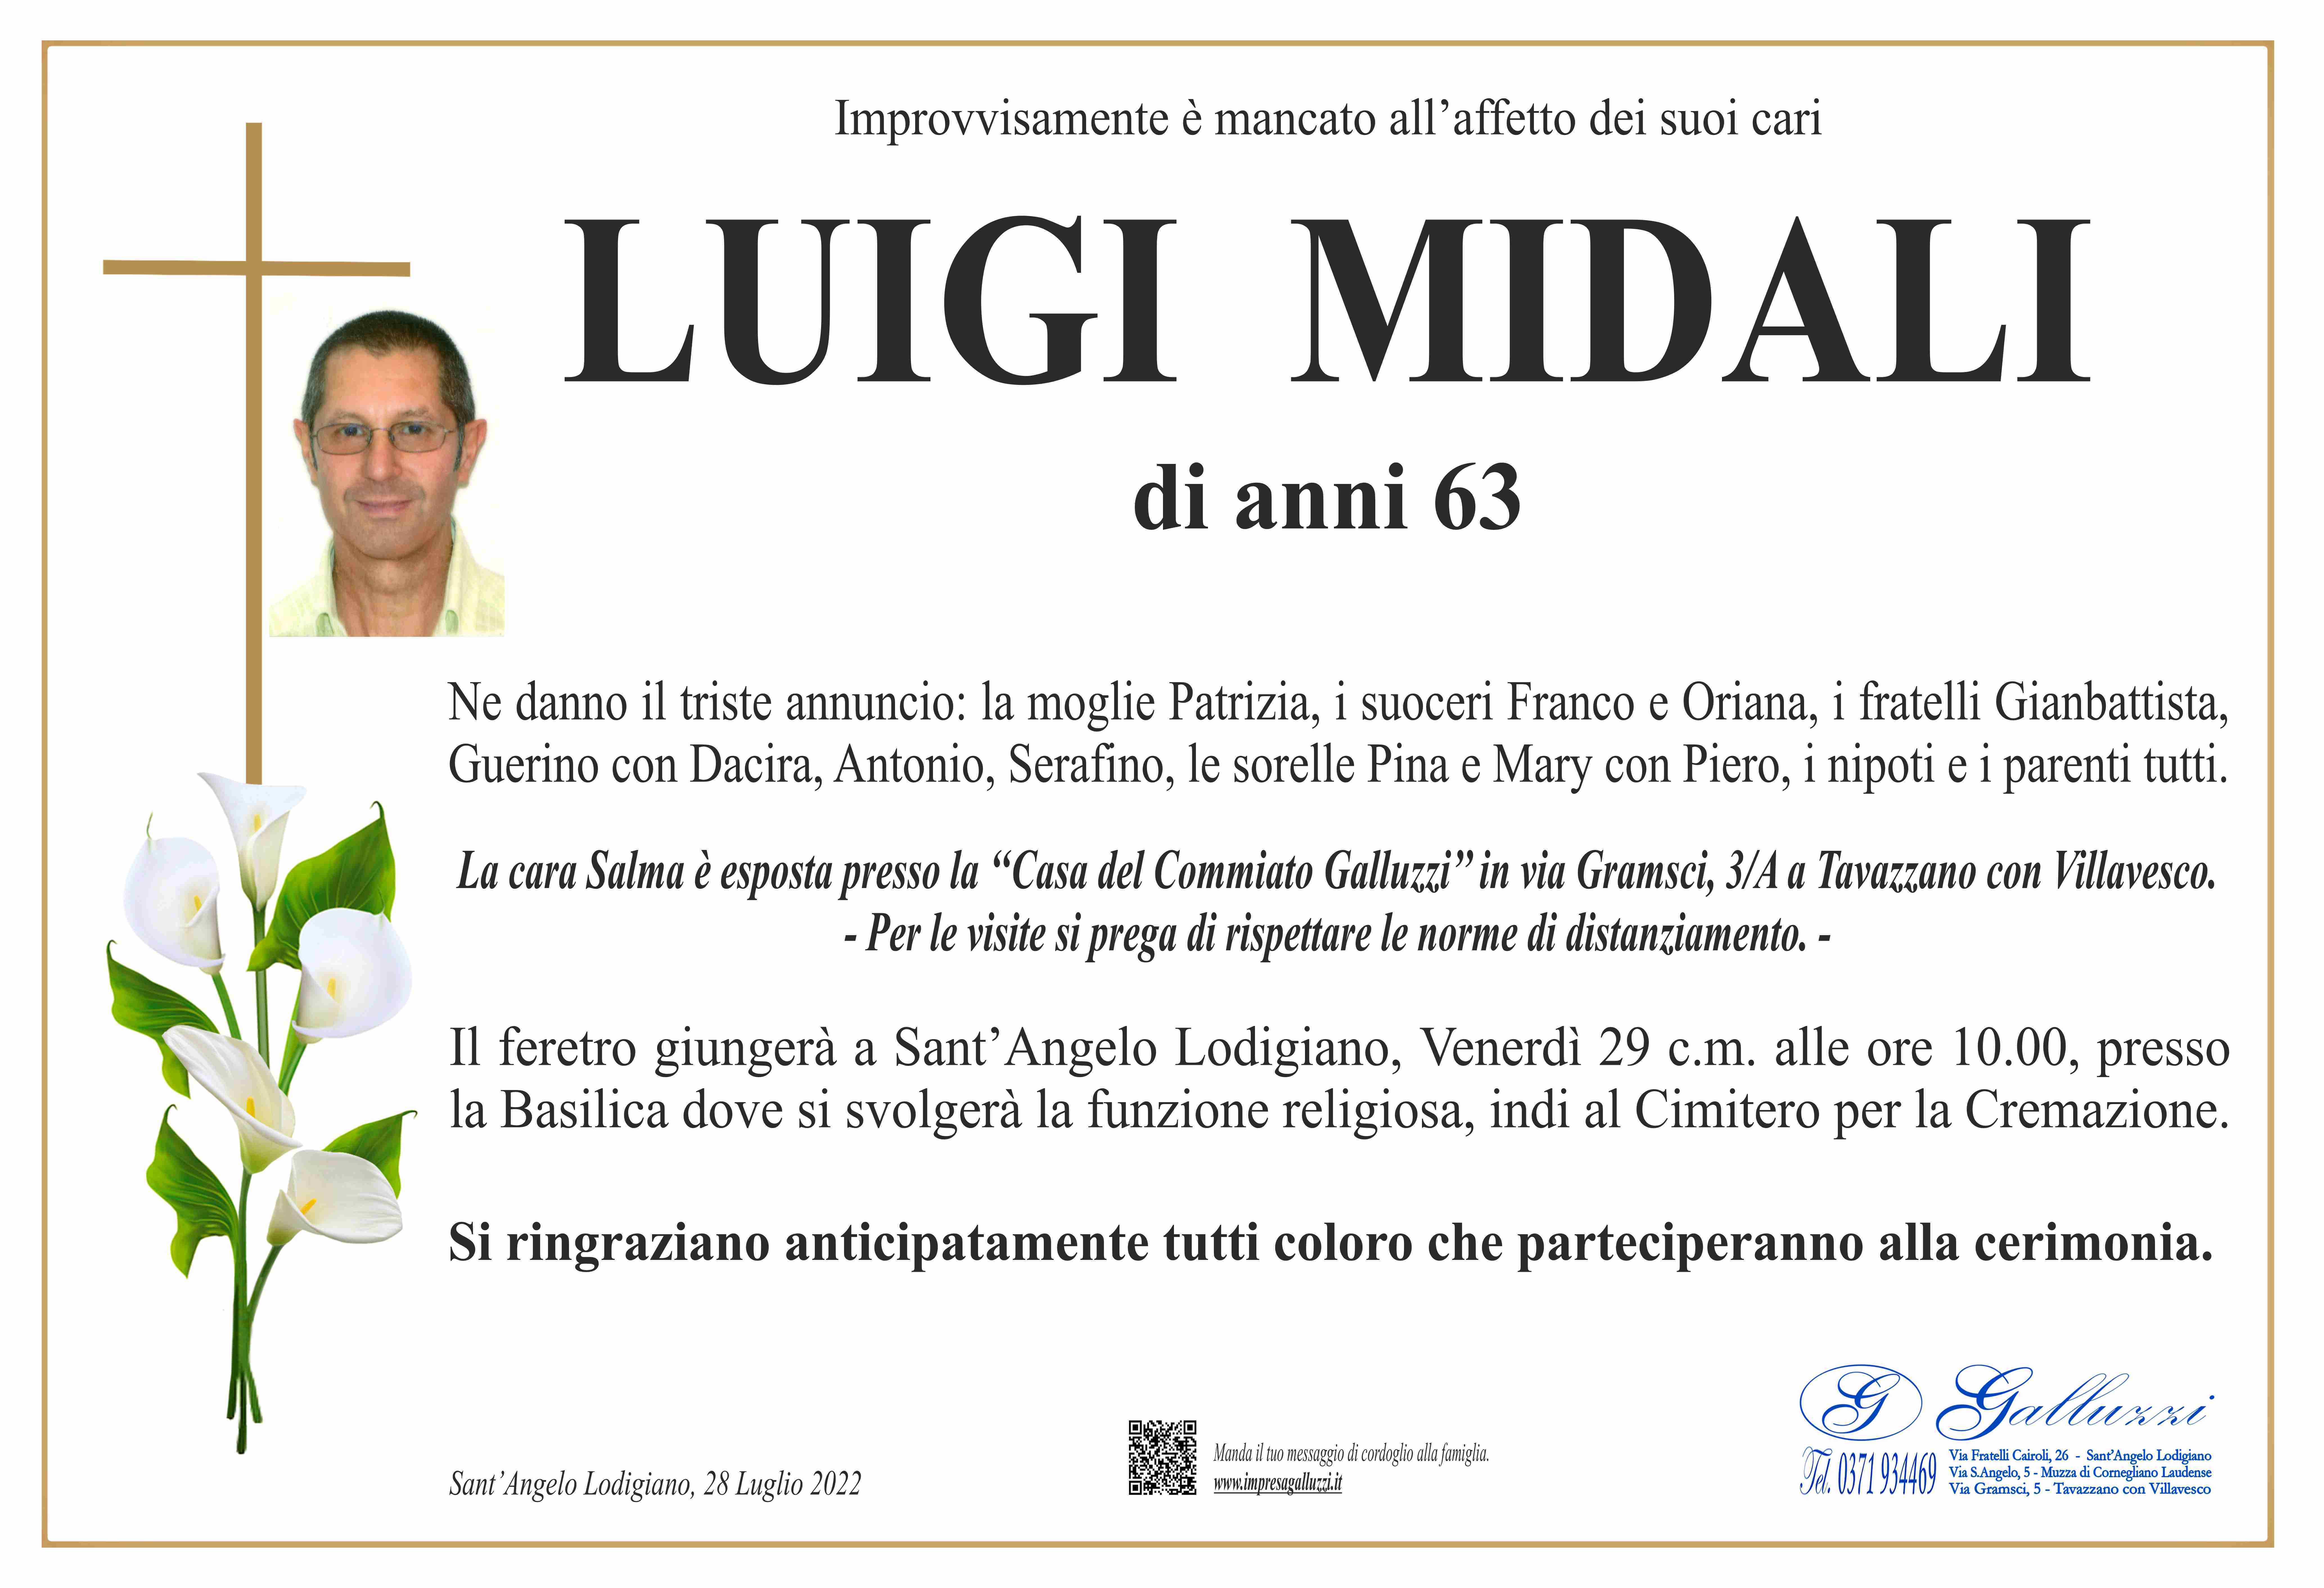 Luigi Midali